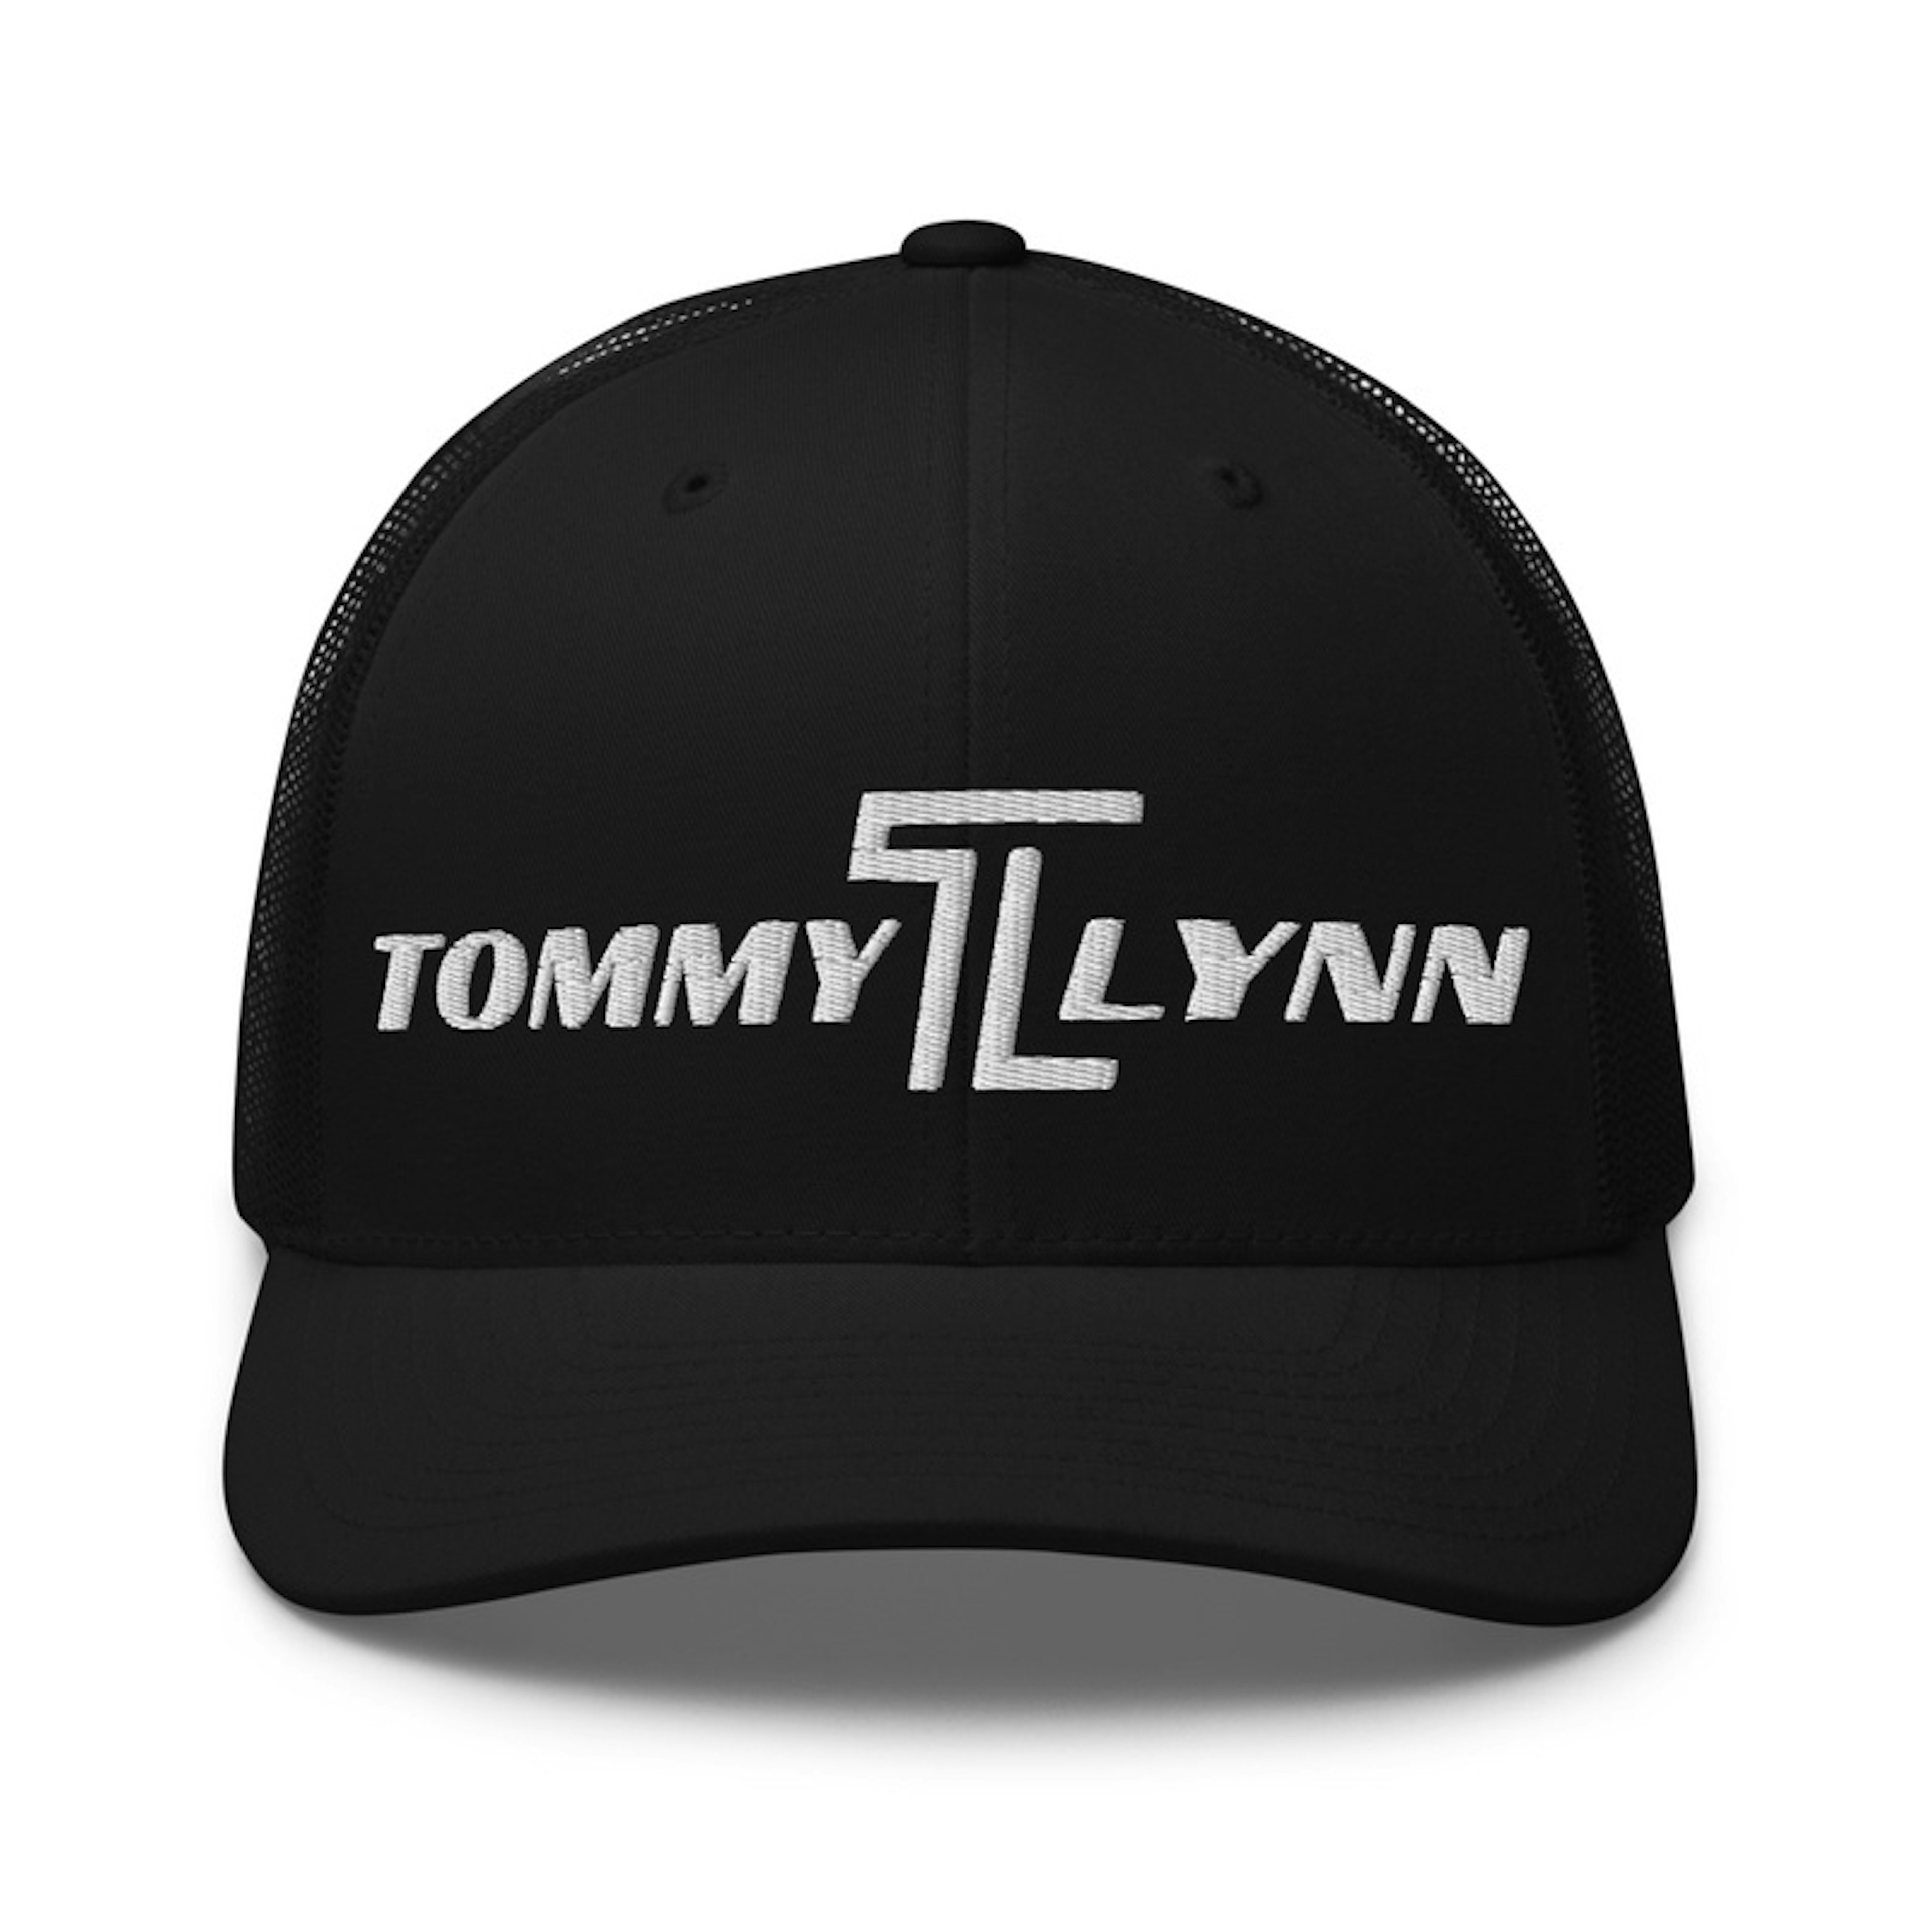 Tommy Lynn Trucker